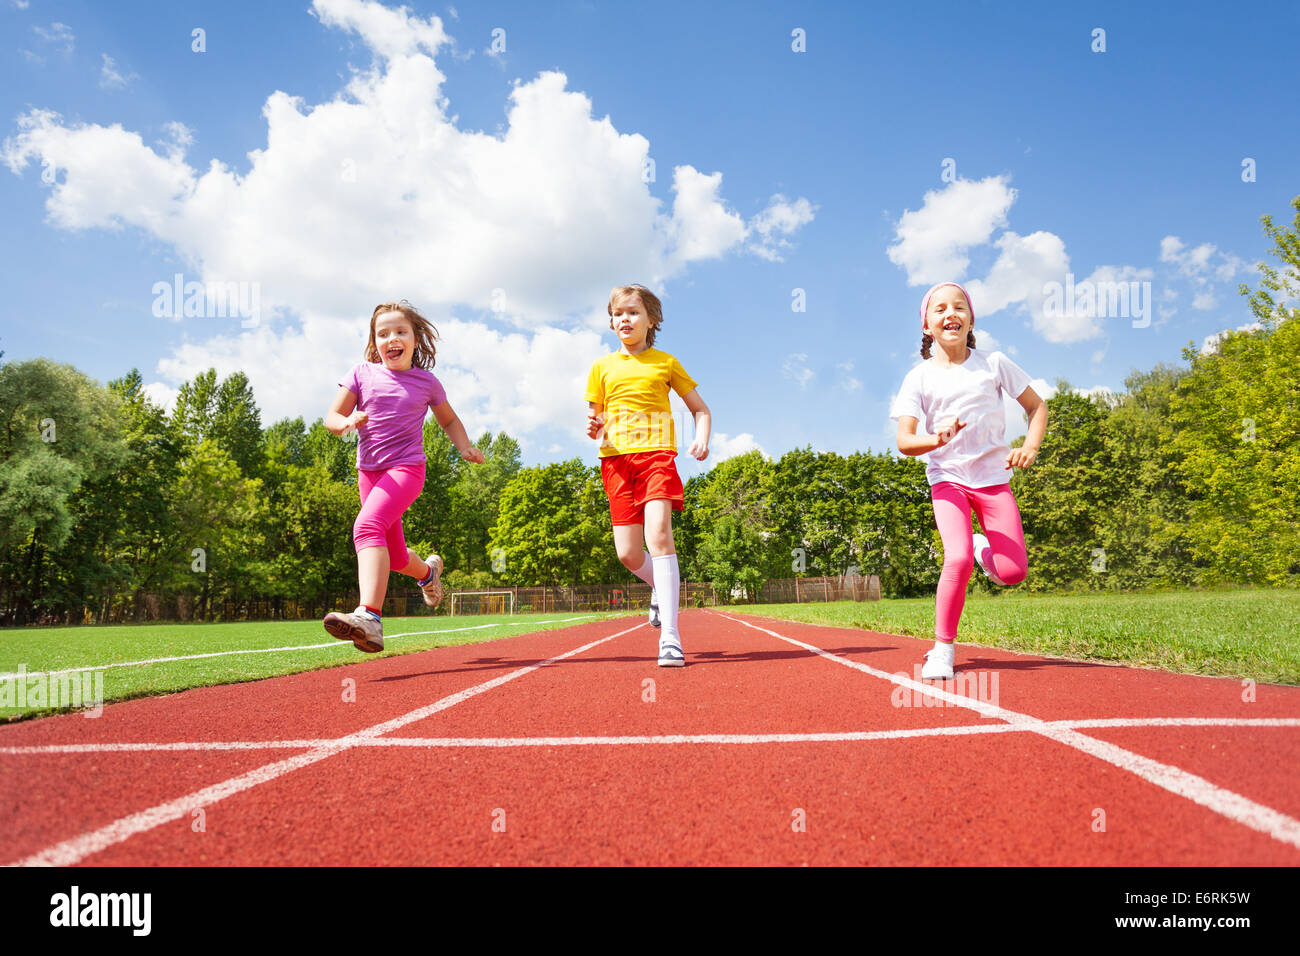 Smiling children running marathon together Stock Photo